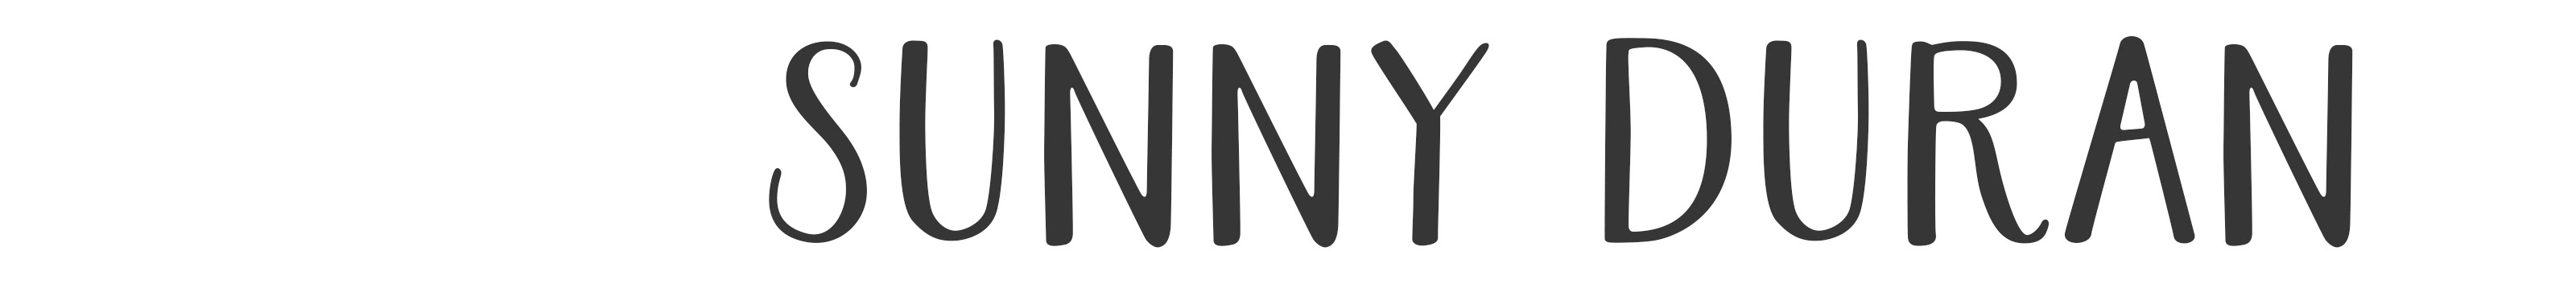 Sunny Duran's profile banner